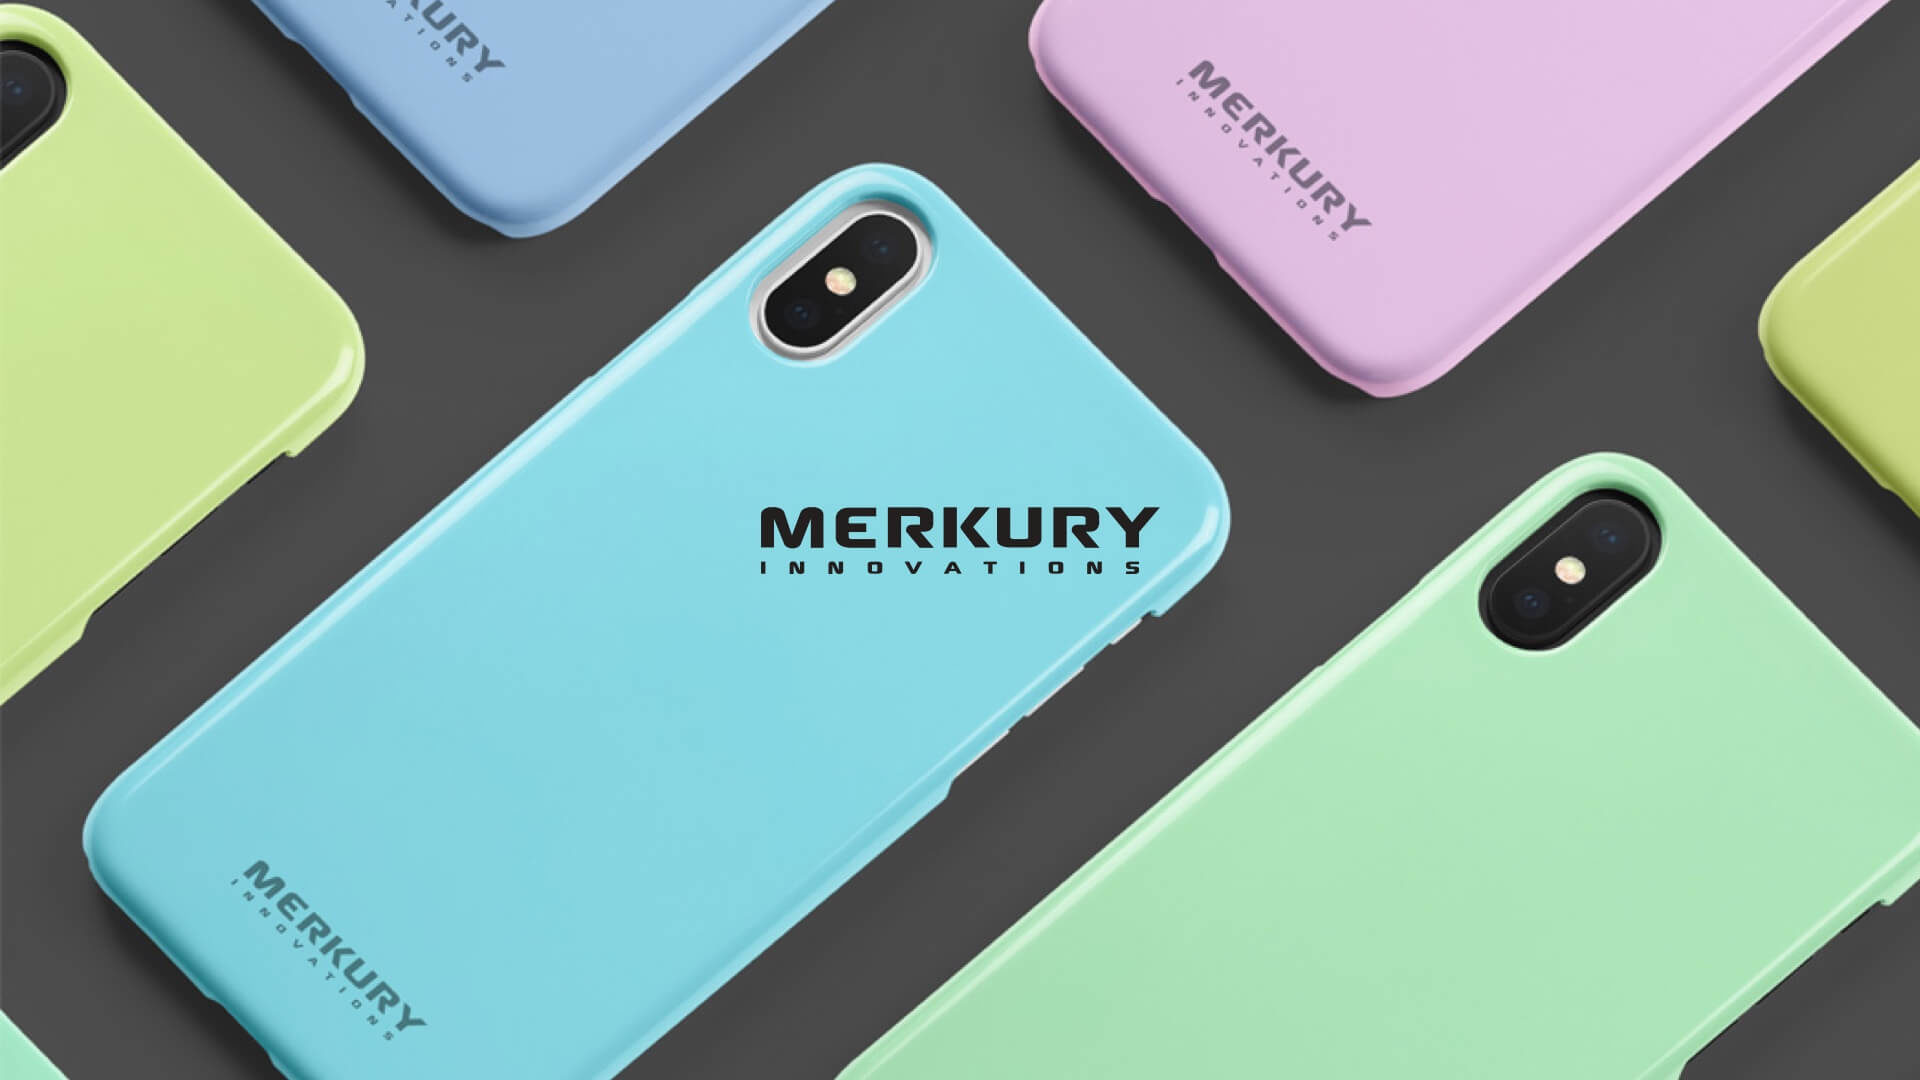 Merkury Innovations Website Design and Development